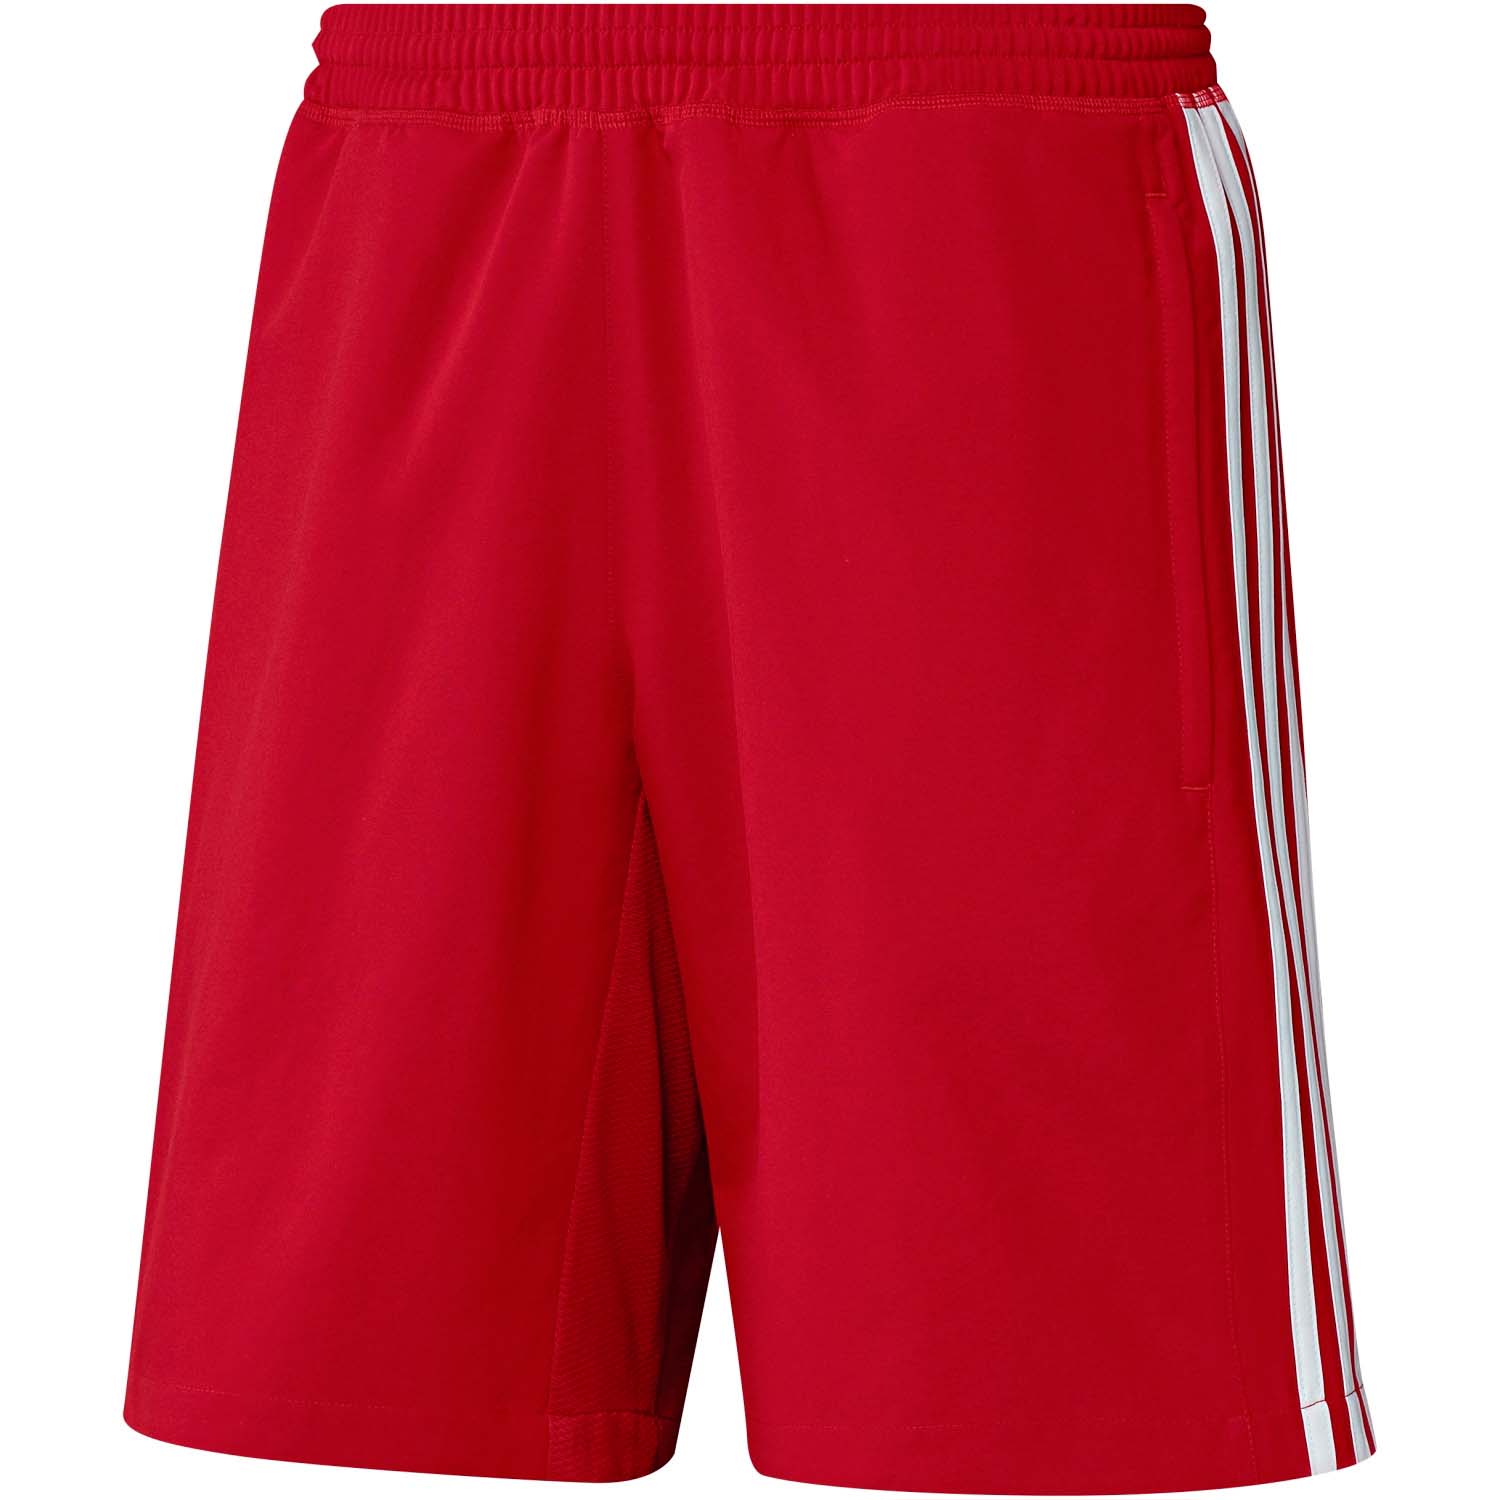 Shorts adidas T16 Cc M - rojo - 